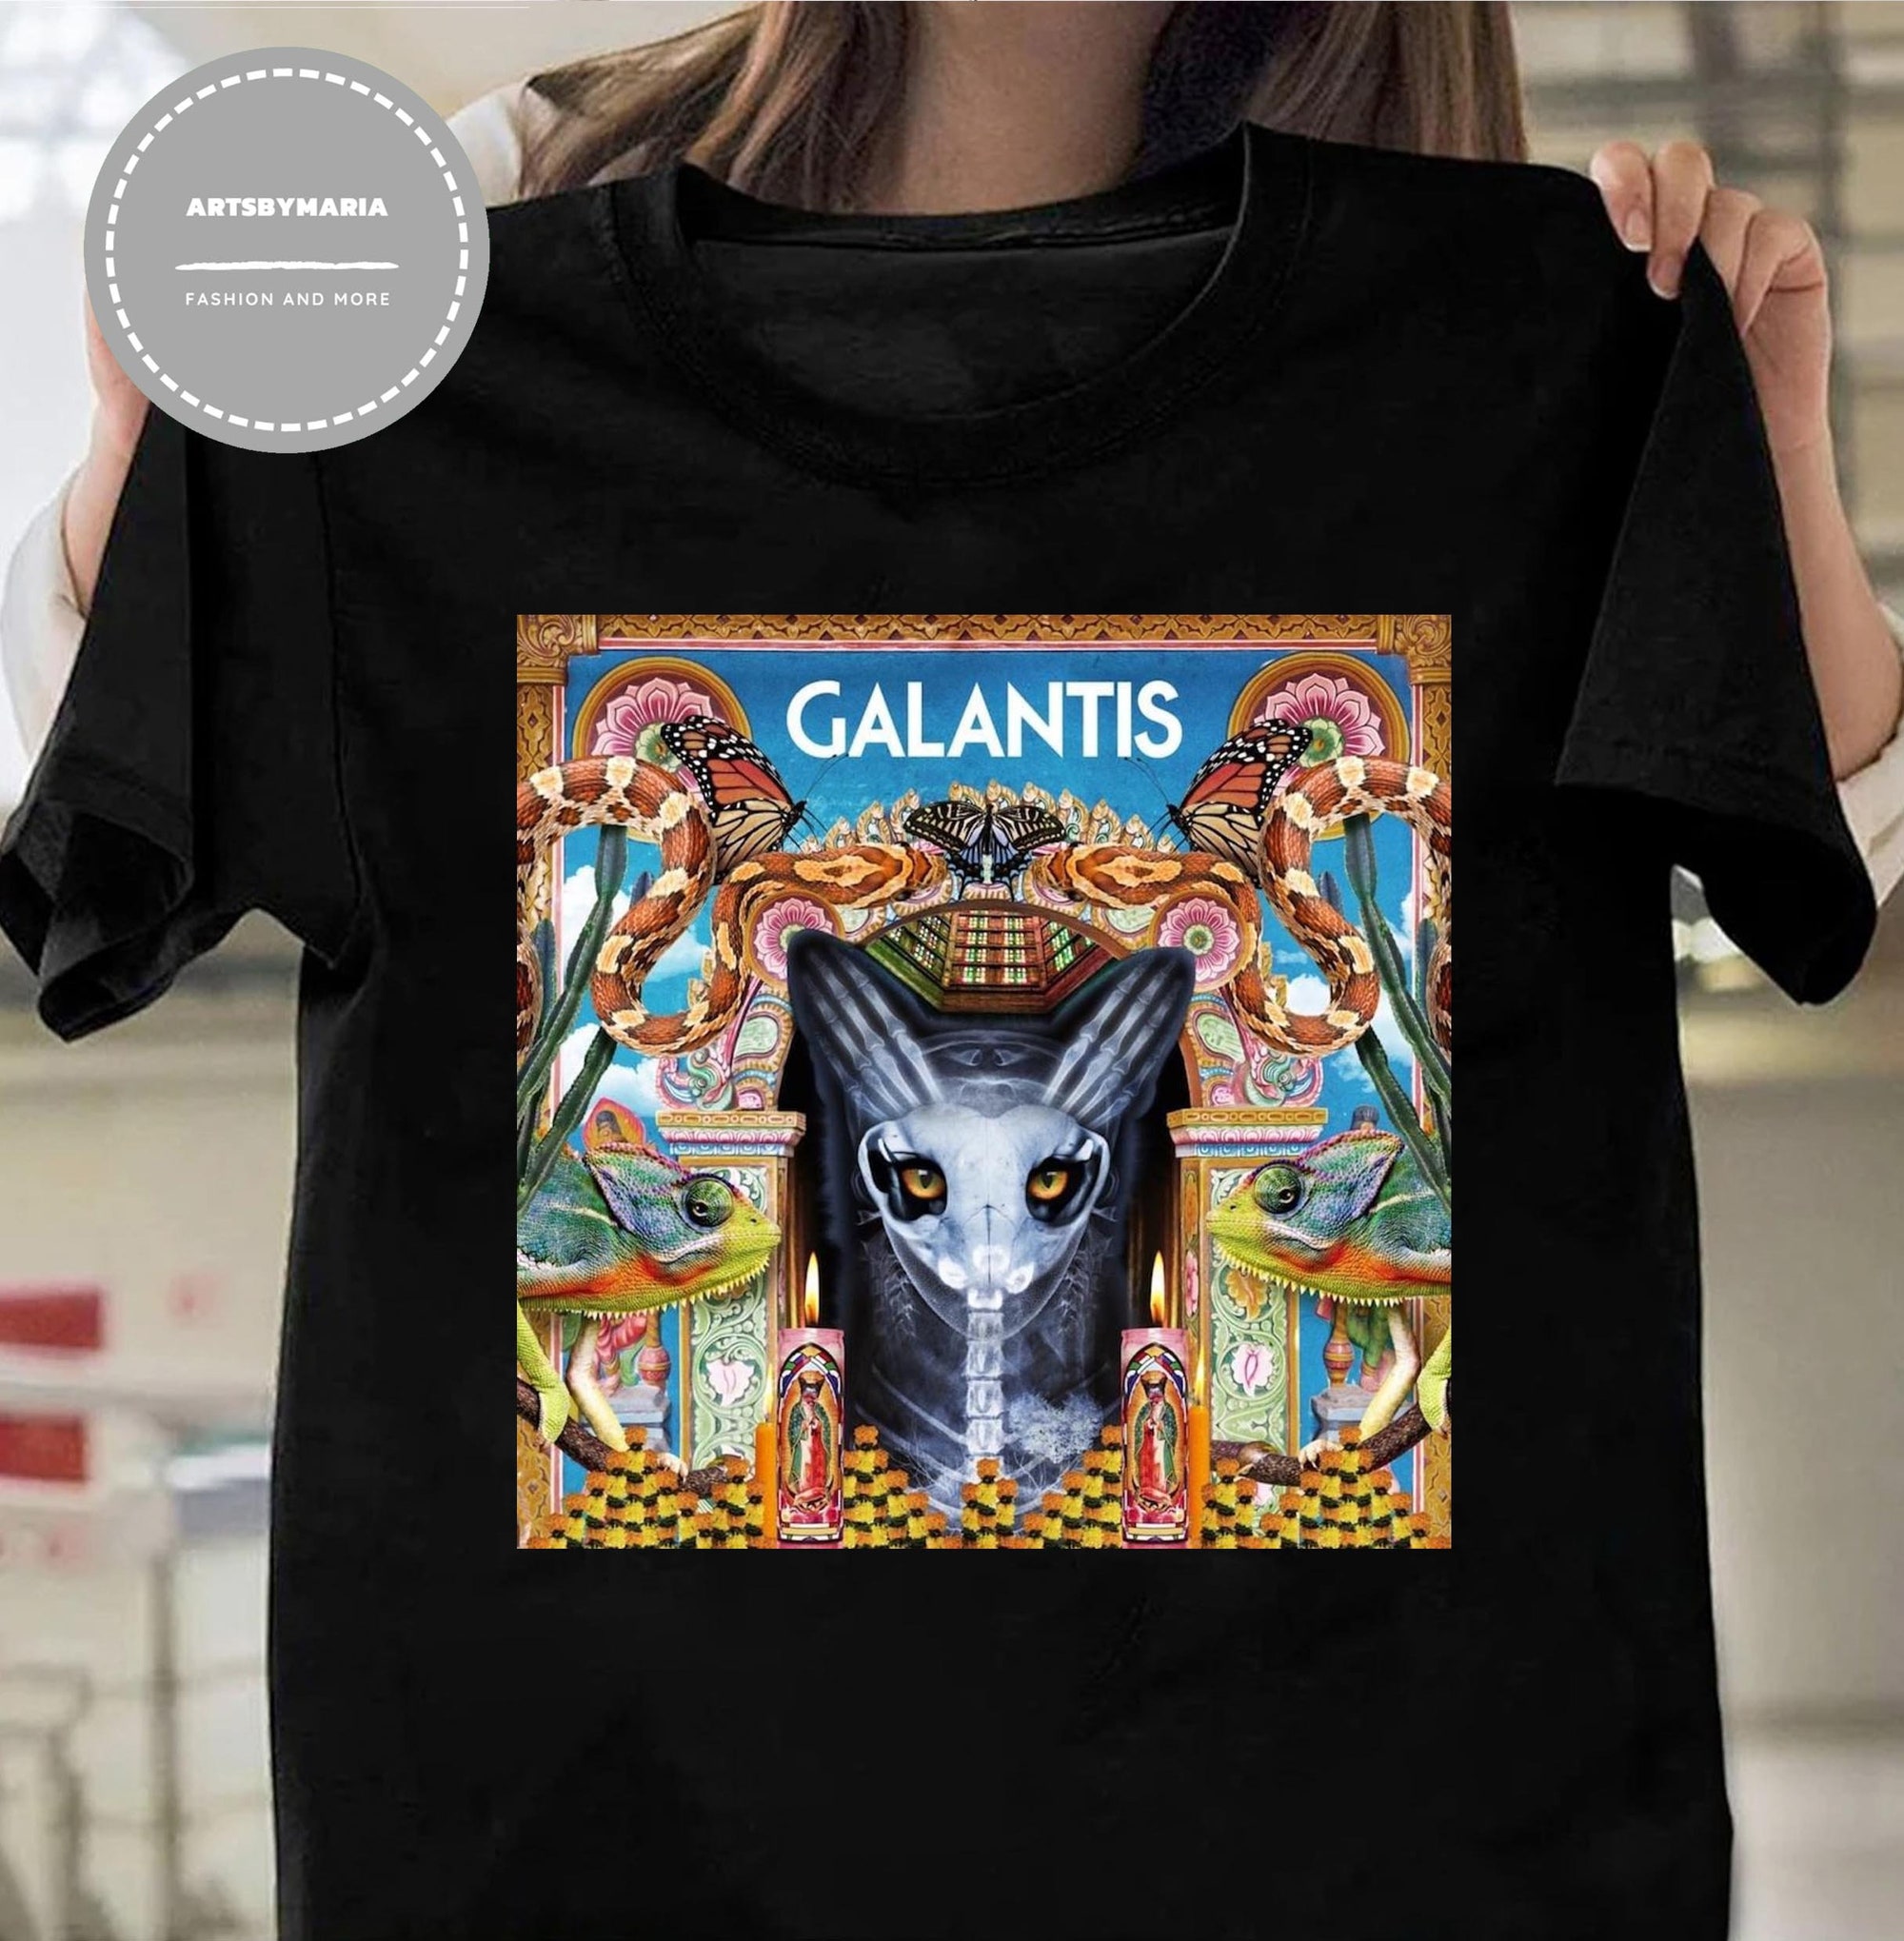 Galantis Church shirt, Galantis Festival Music shirt, Galantis Tour 2022 shirt